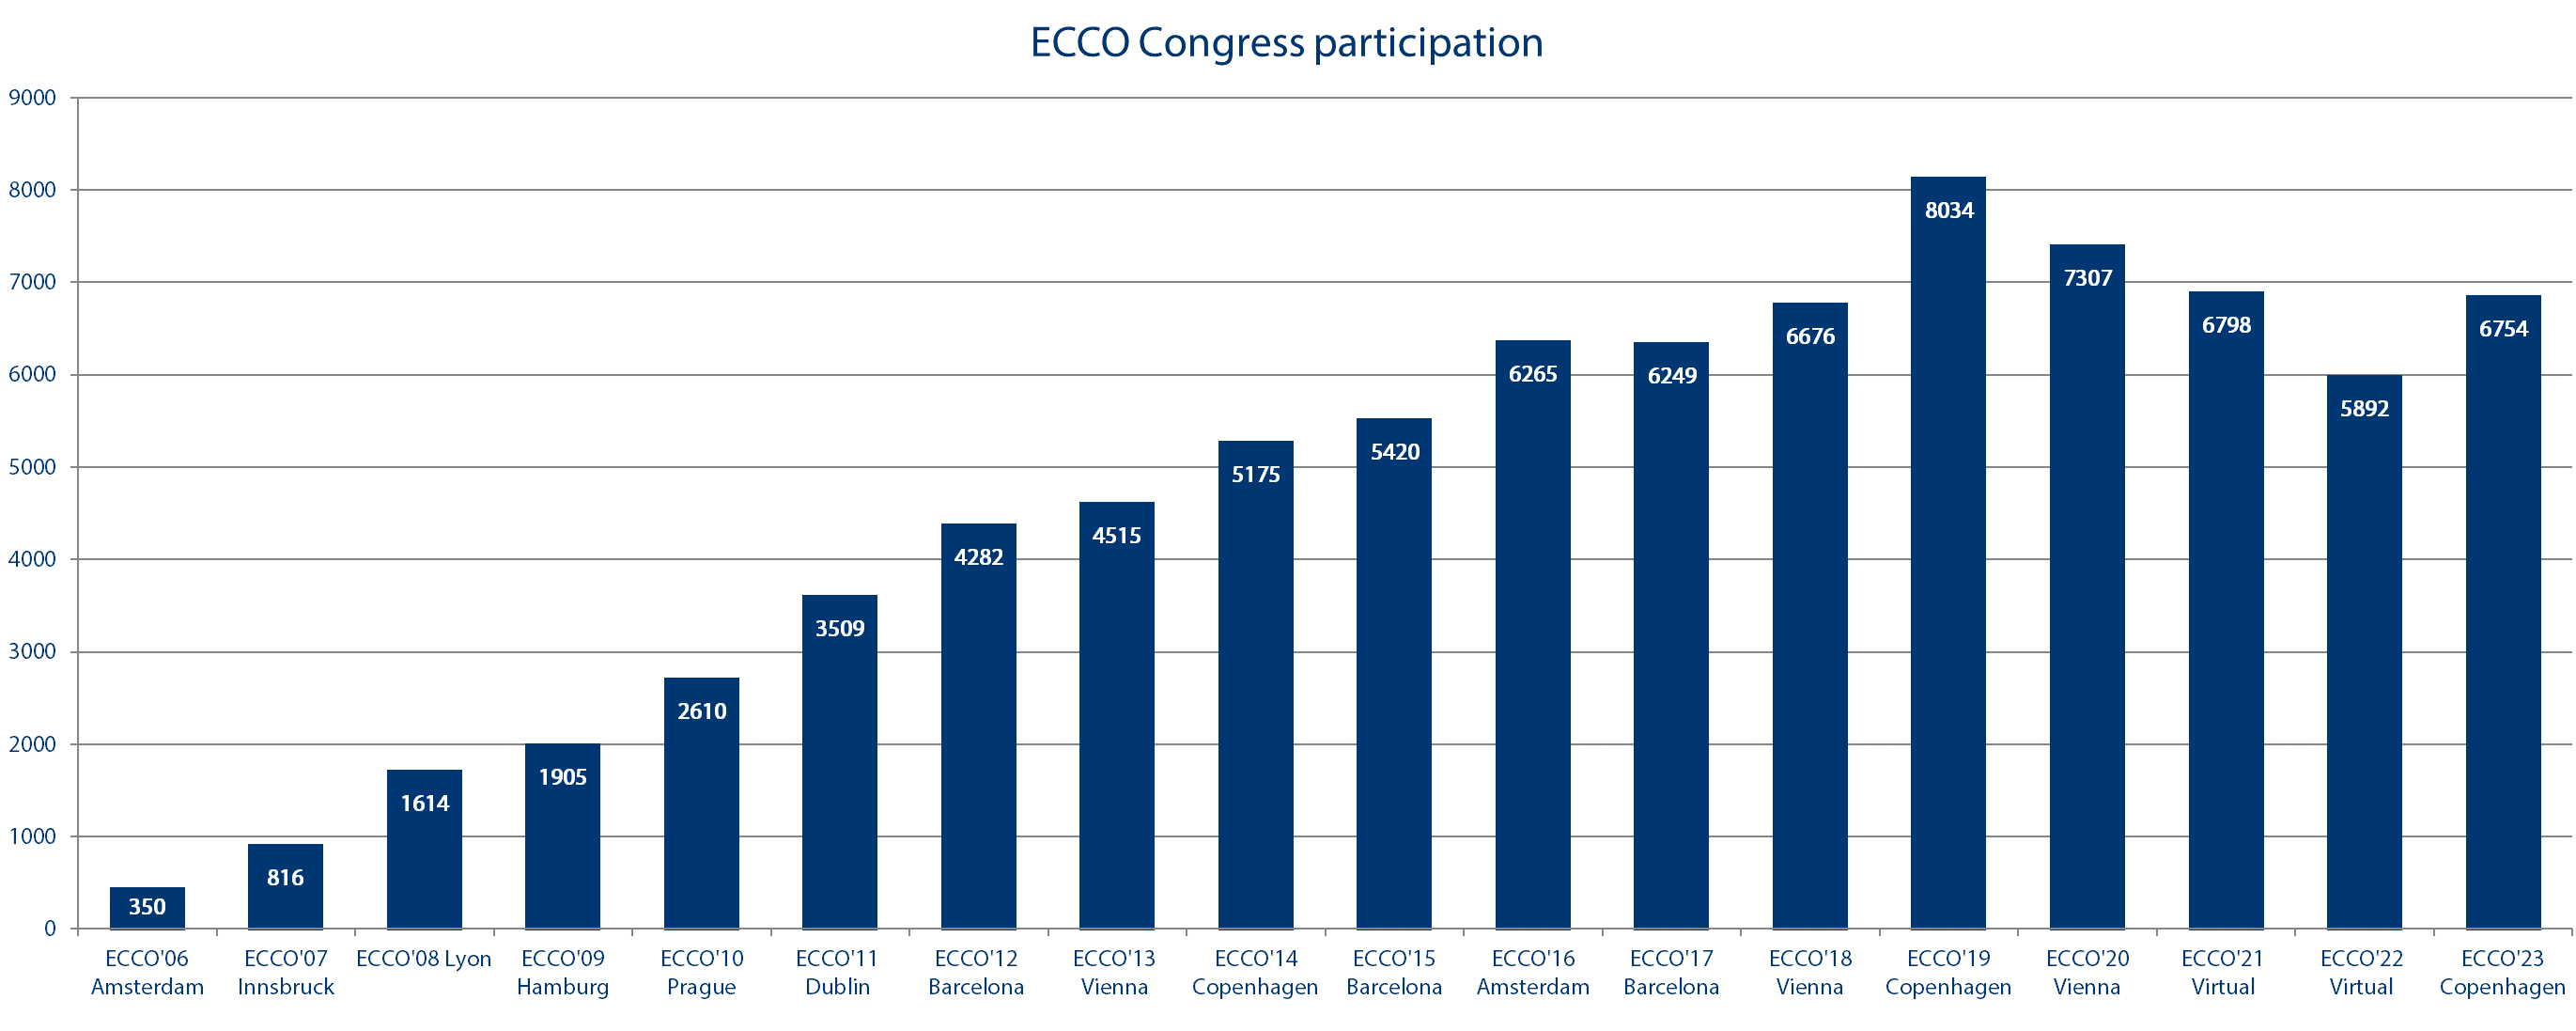 ECCO’23 Copenhagen - Congress participants 6754